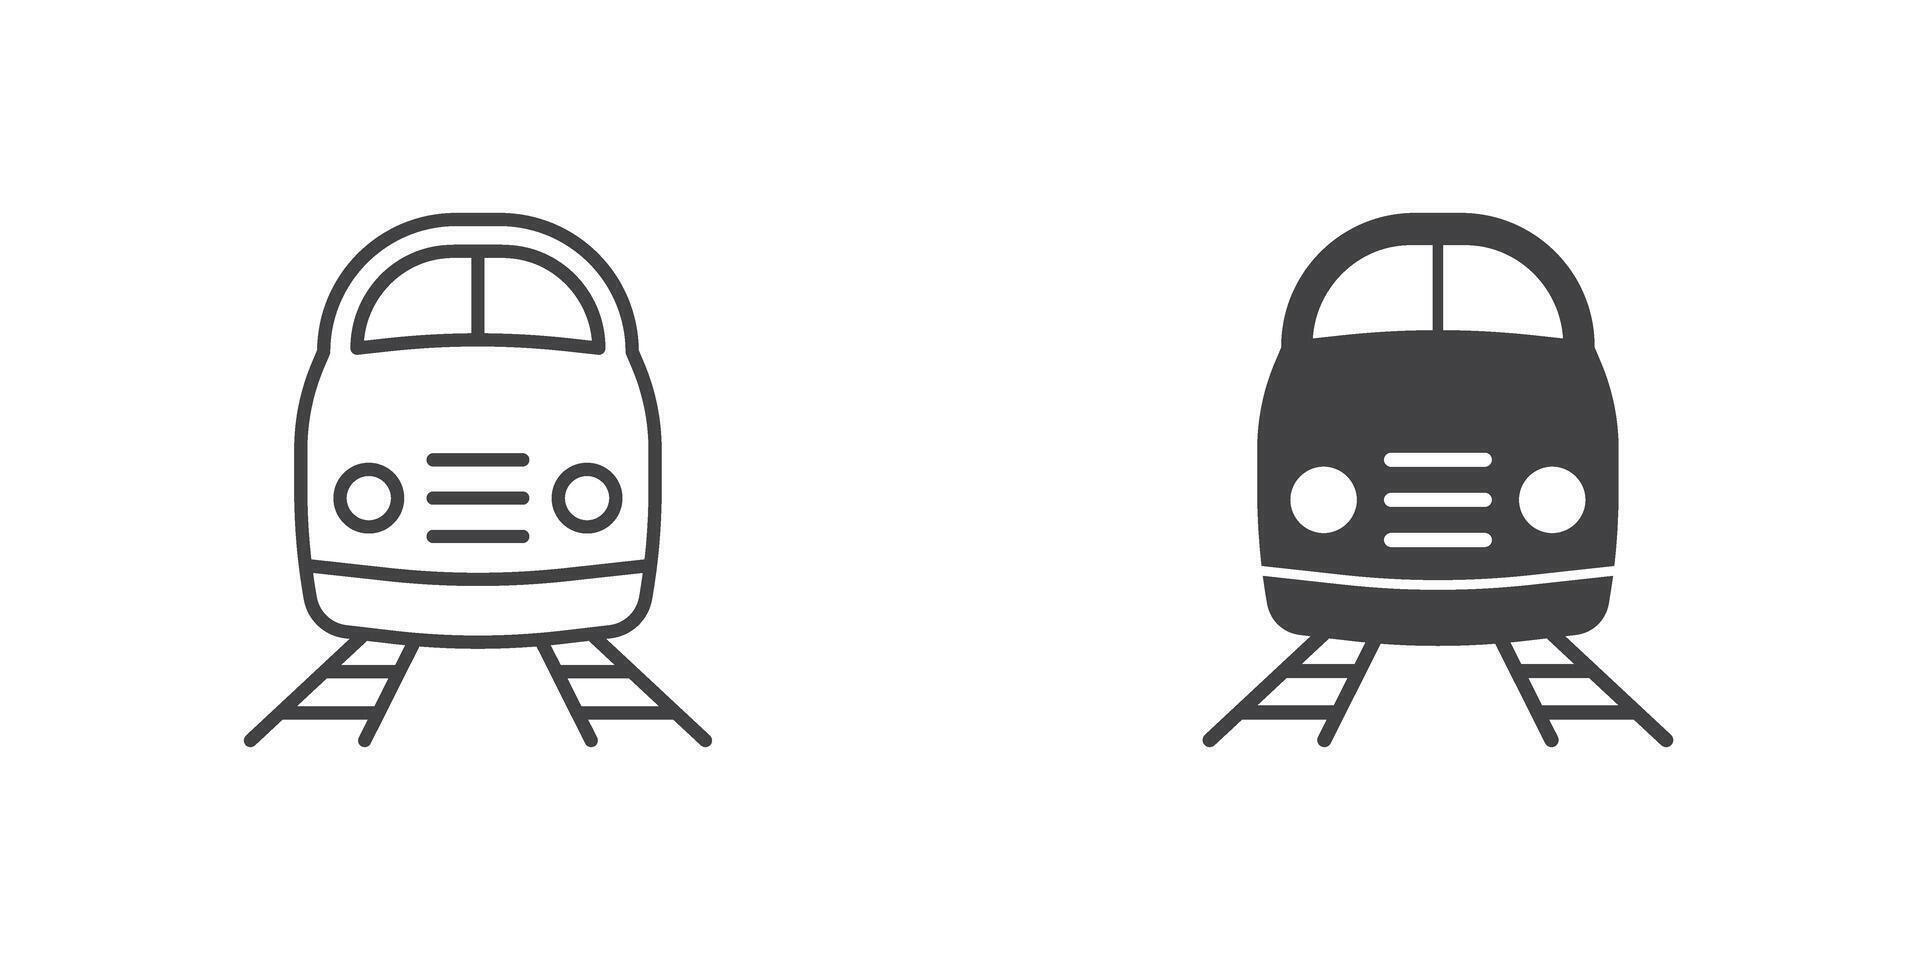 metro tren icono en plano estilo. subterraneo ilustración en aislado antecedentes. transporte firmar negocio concepto. vector